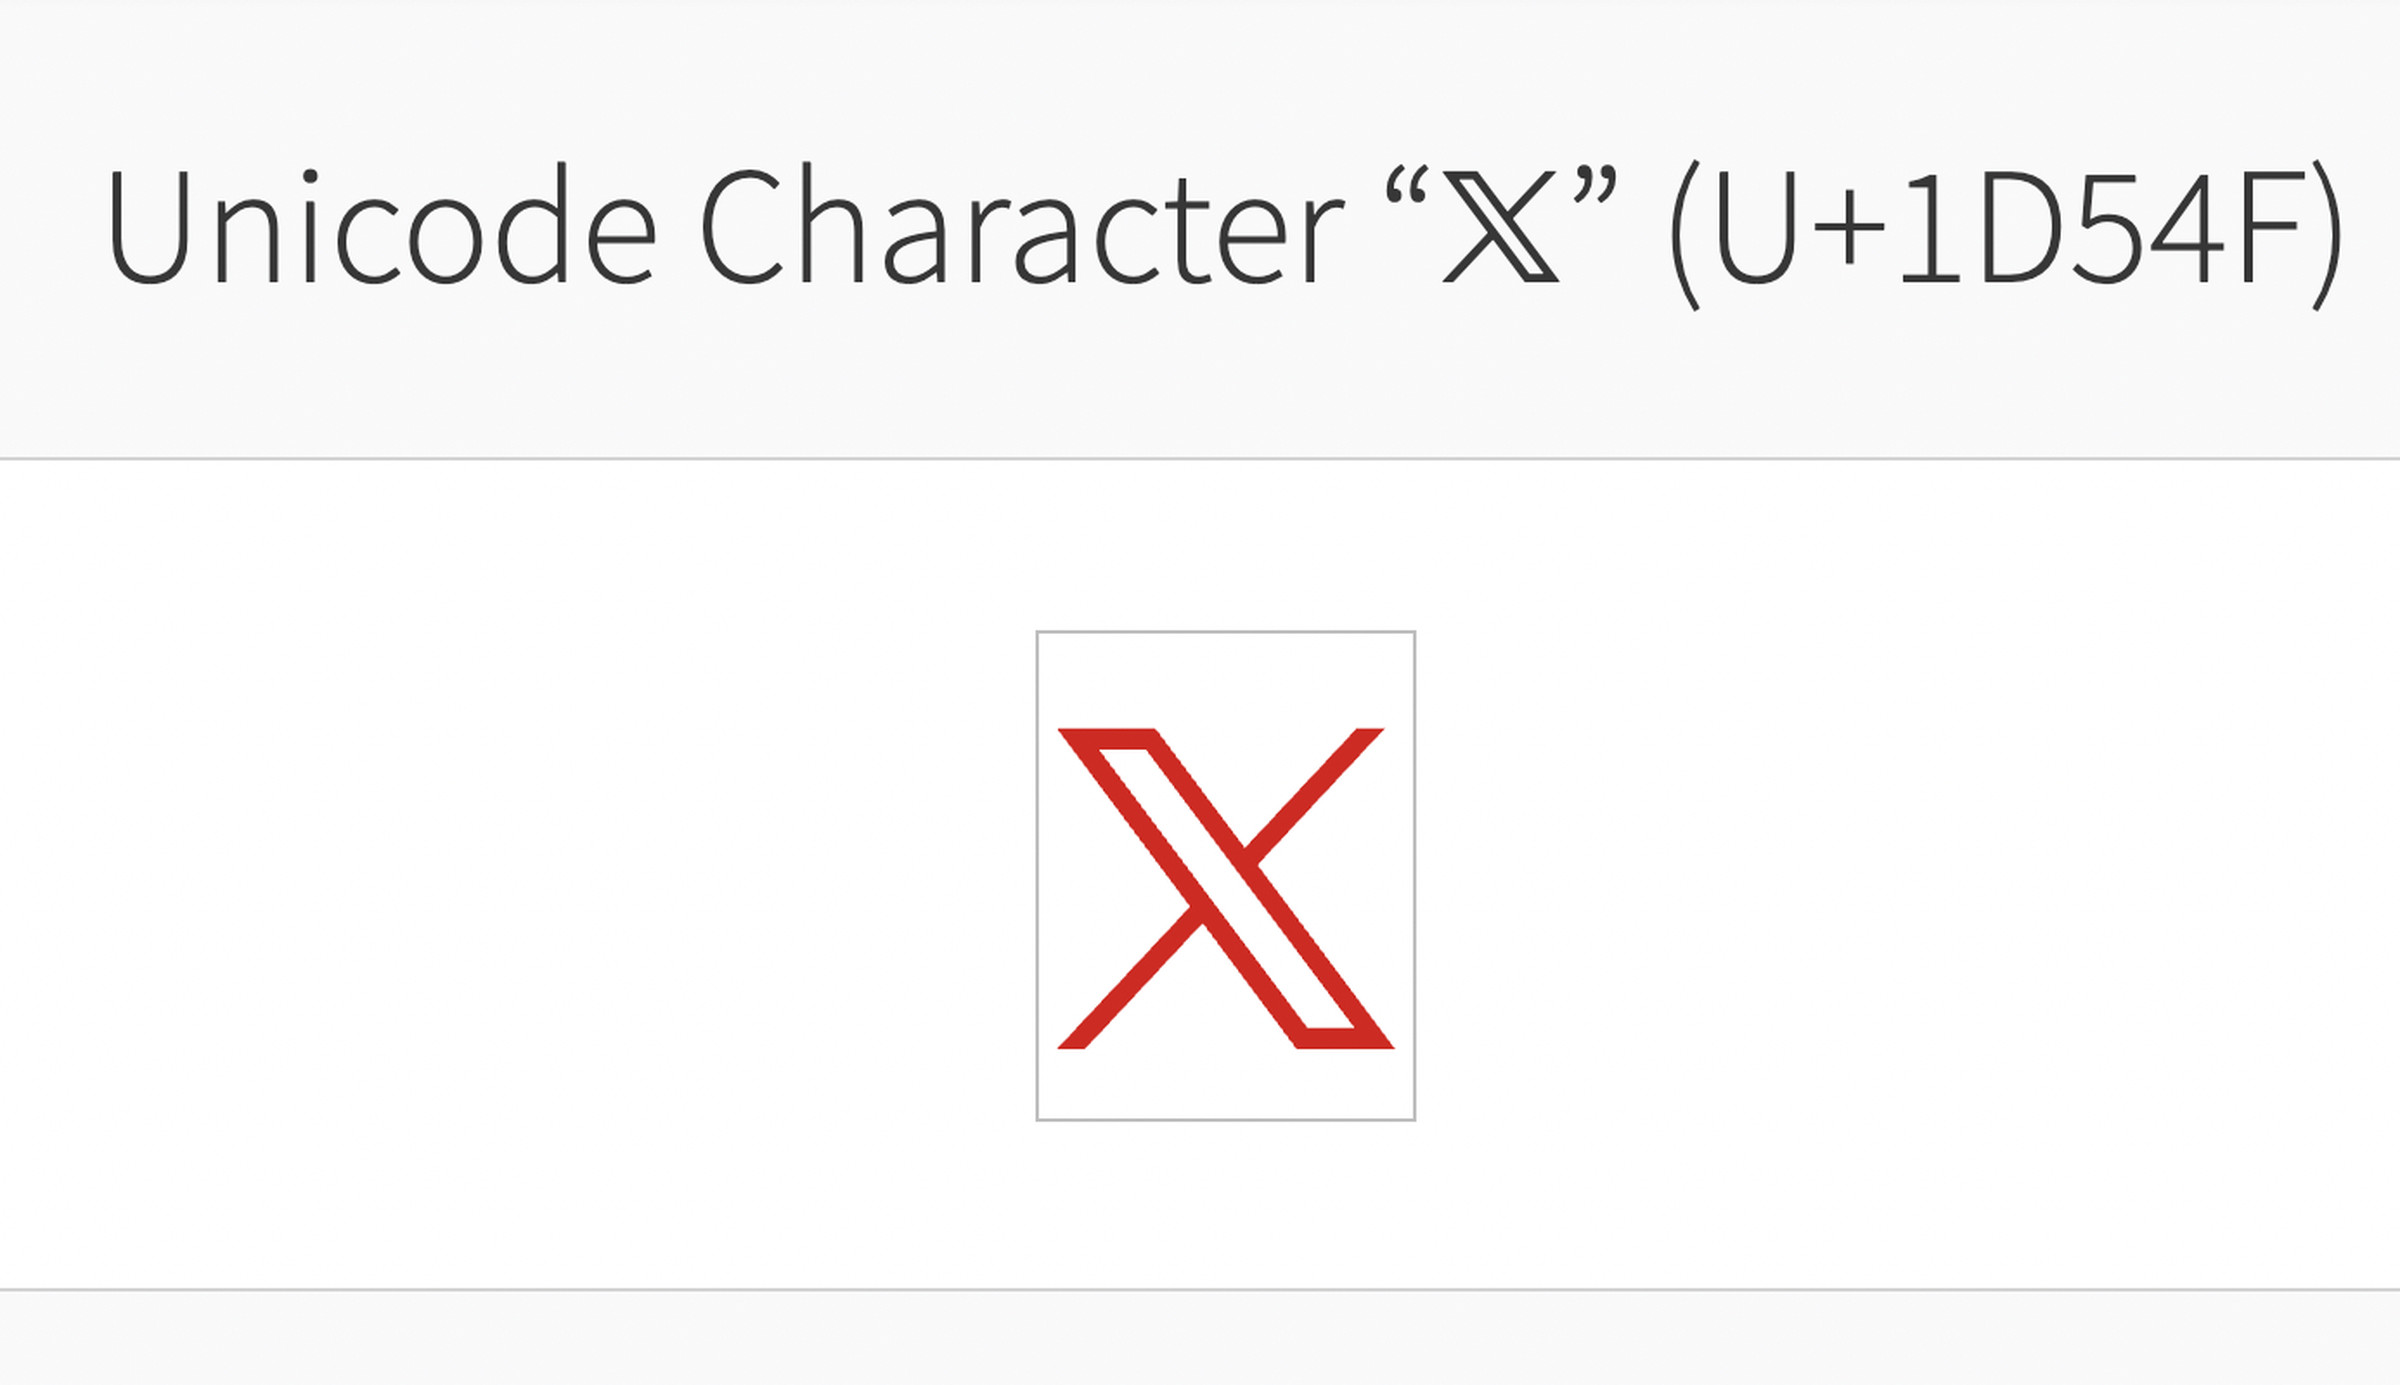 The Unicode character mathematical double-struck capital X (U+1D54F).